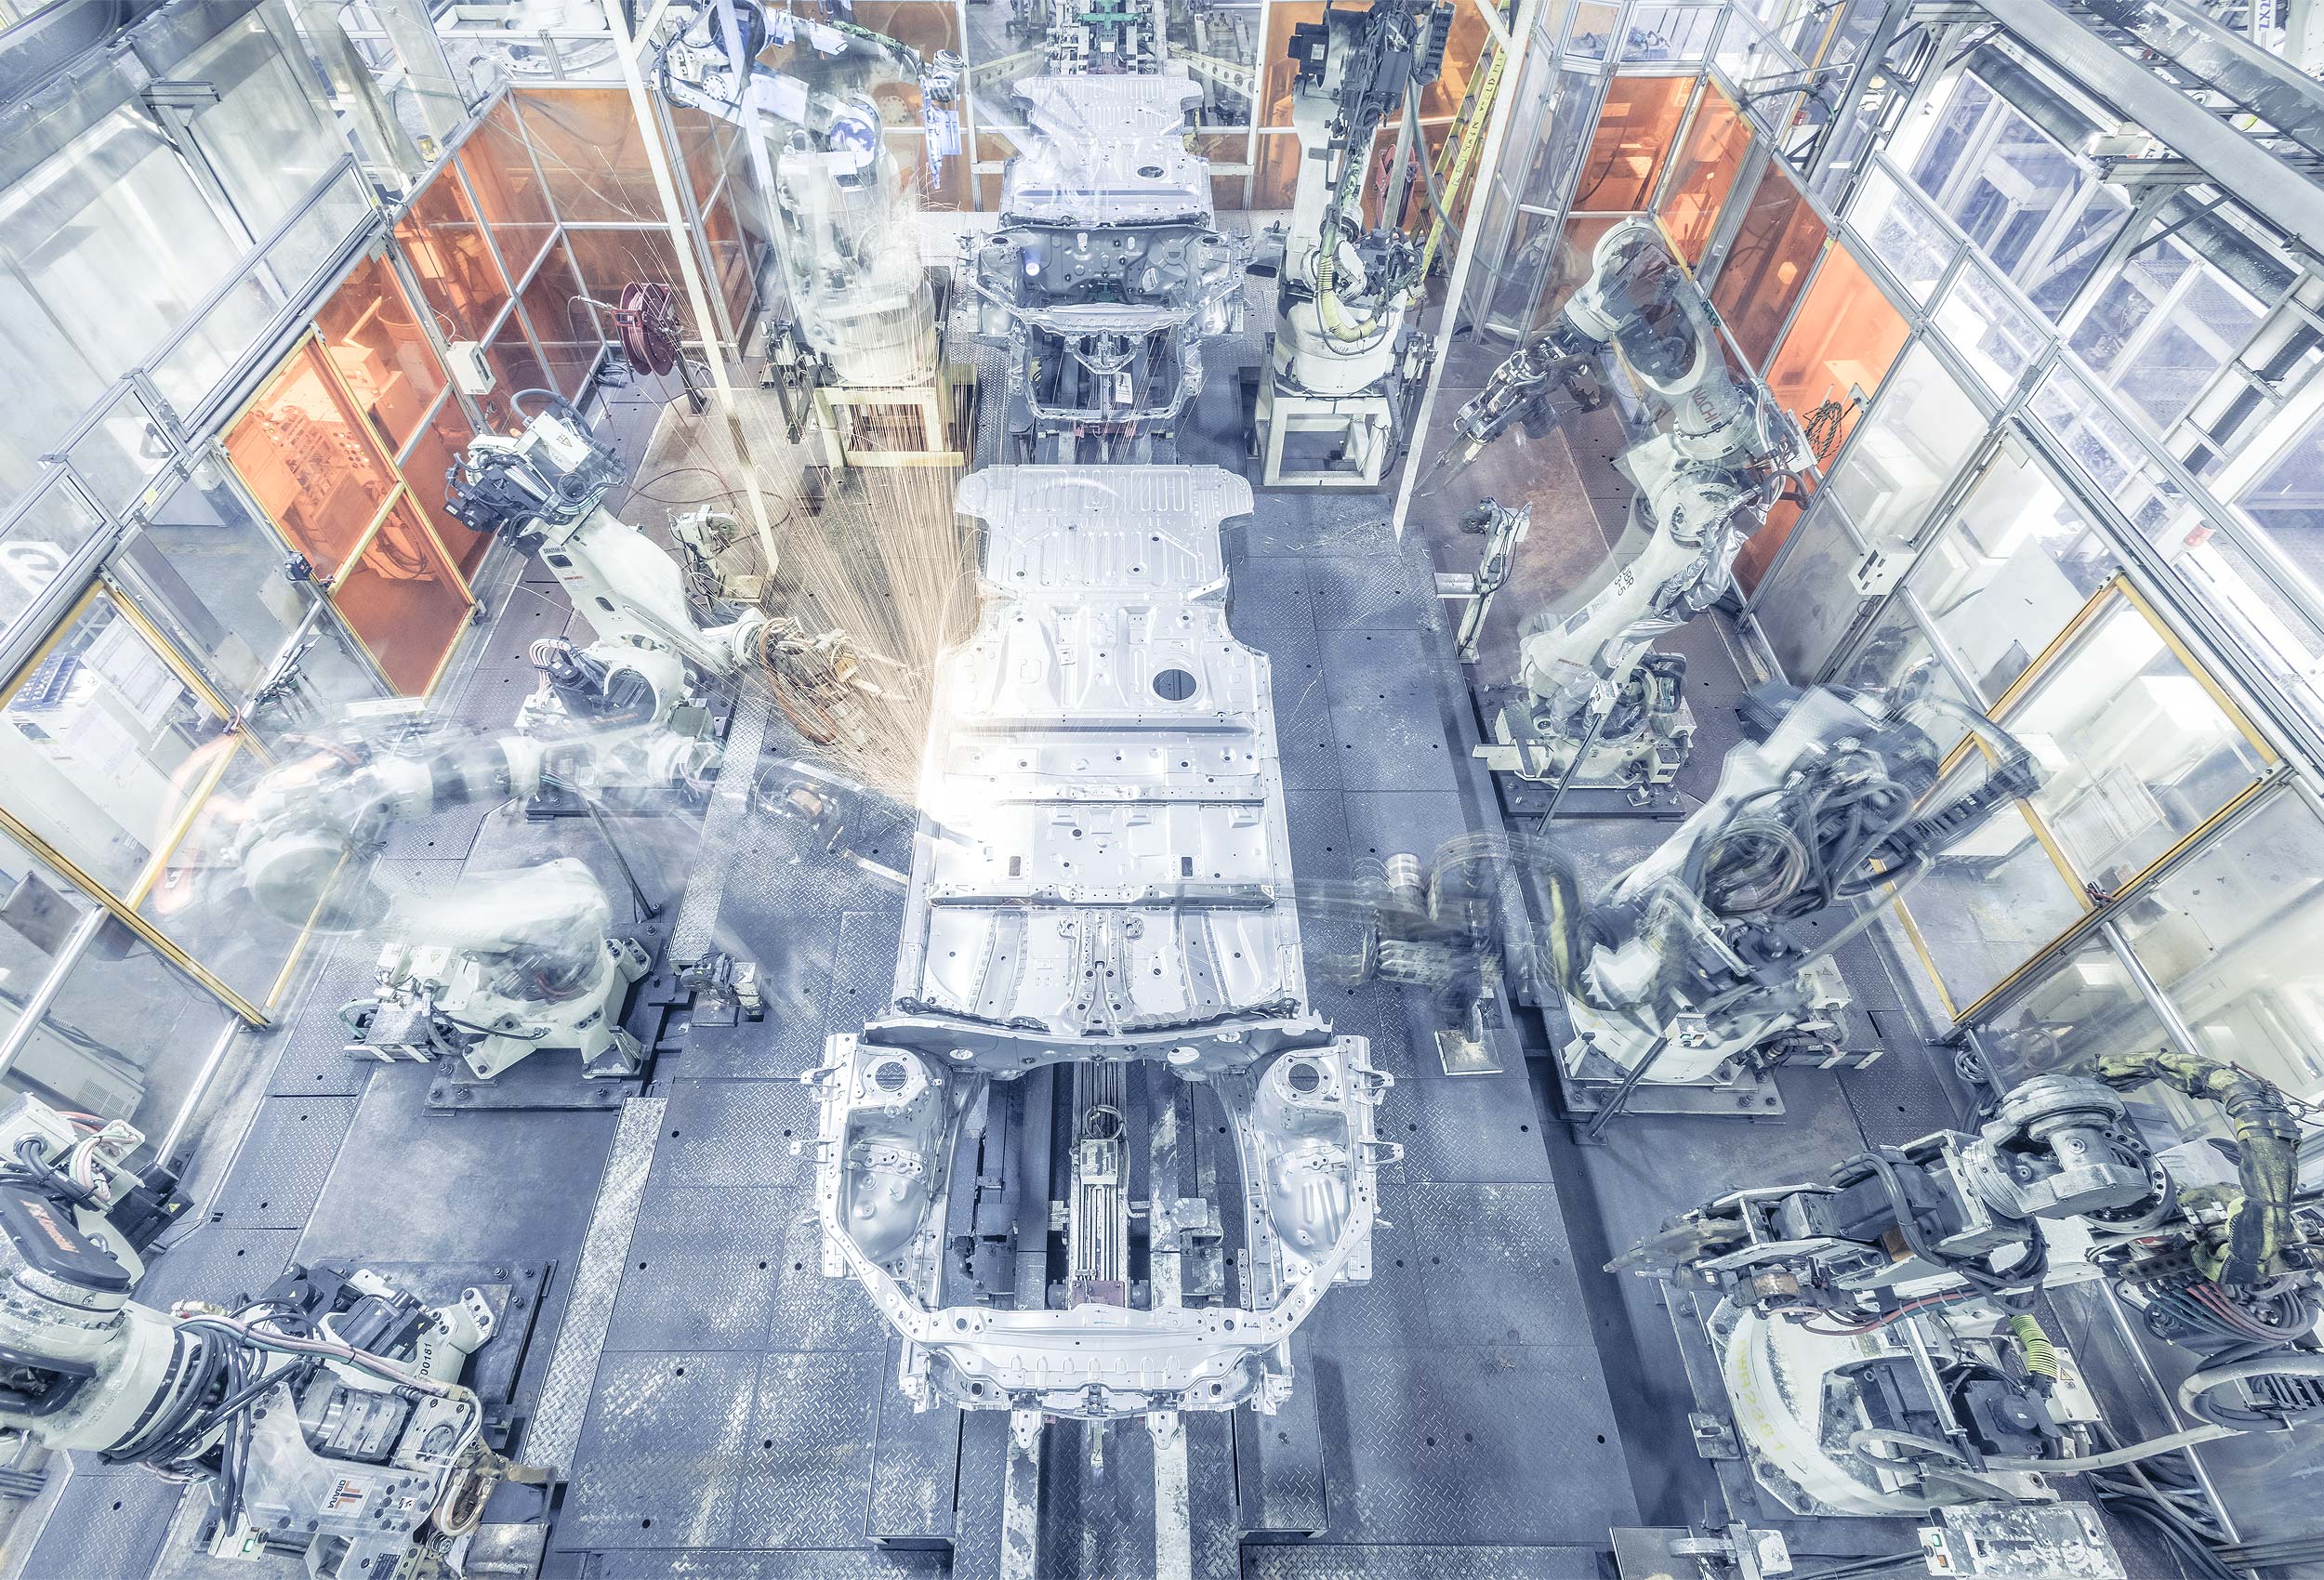 Lexus robots by corporate industrial photographer Kristopher Grunert